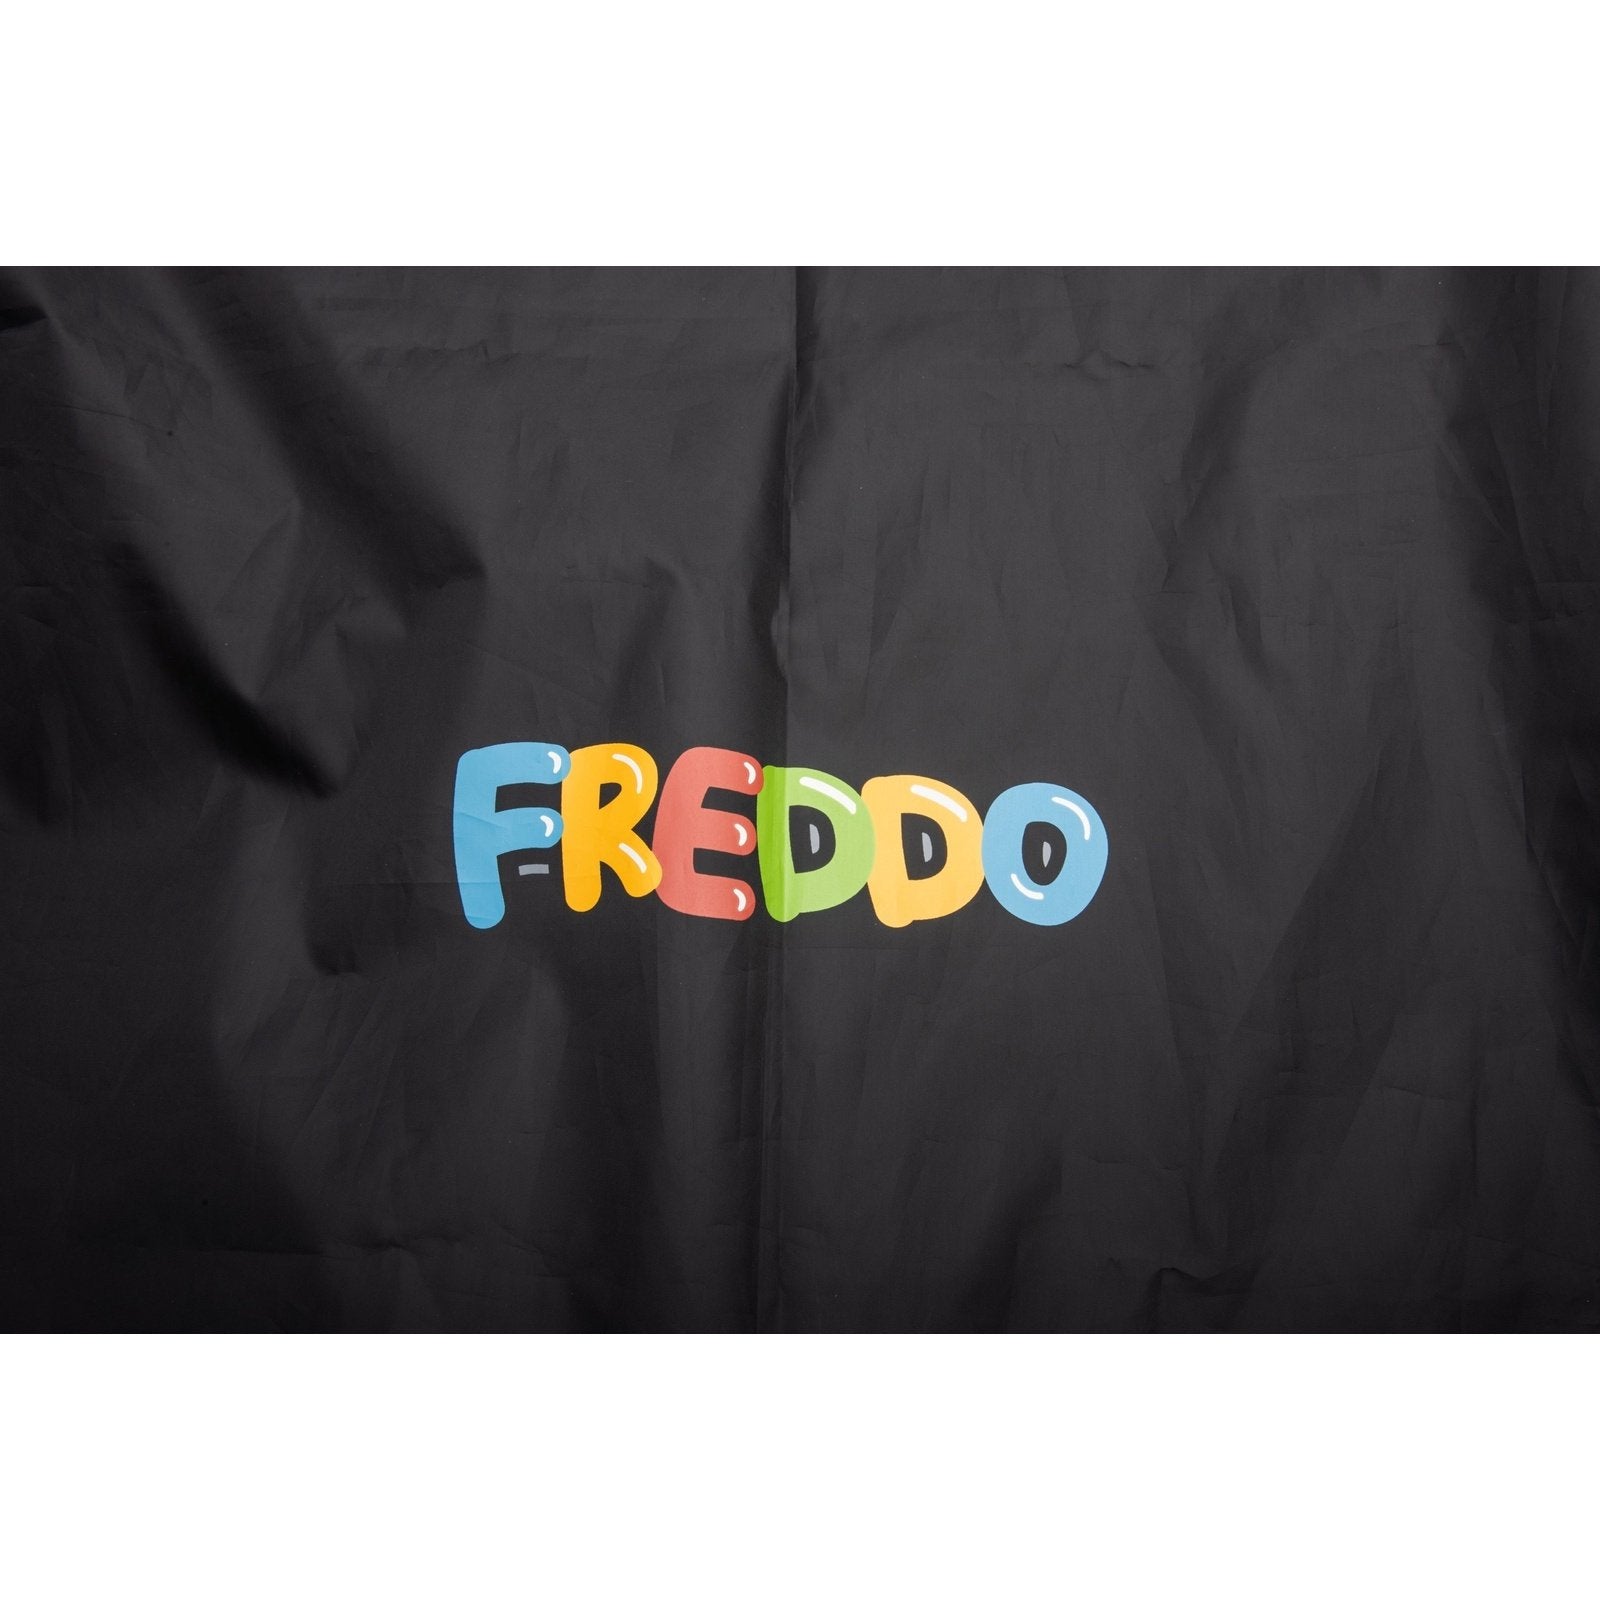 Freddo Ride on Car Covers SpadezStore